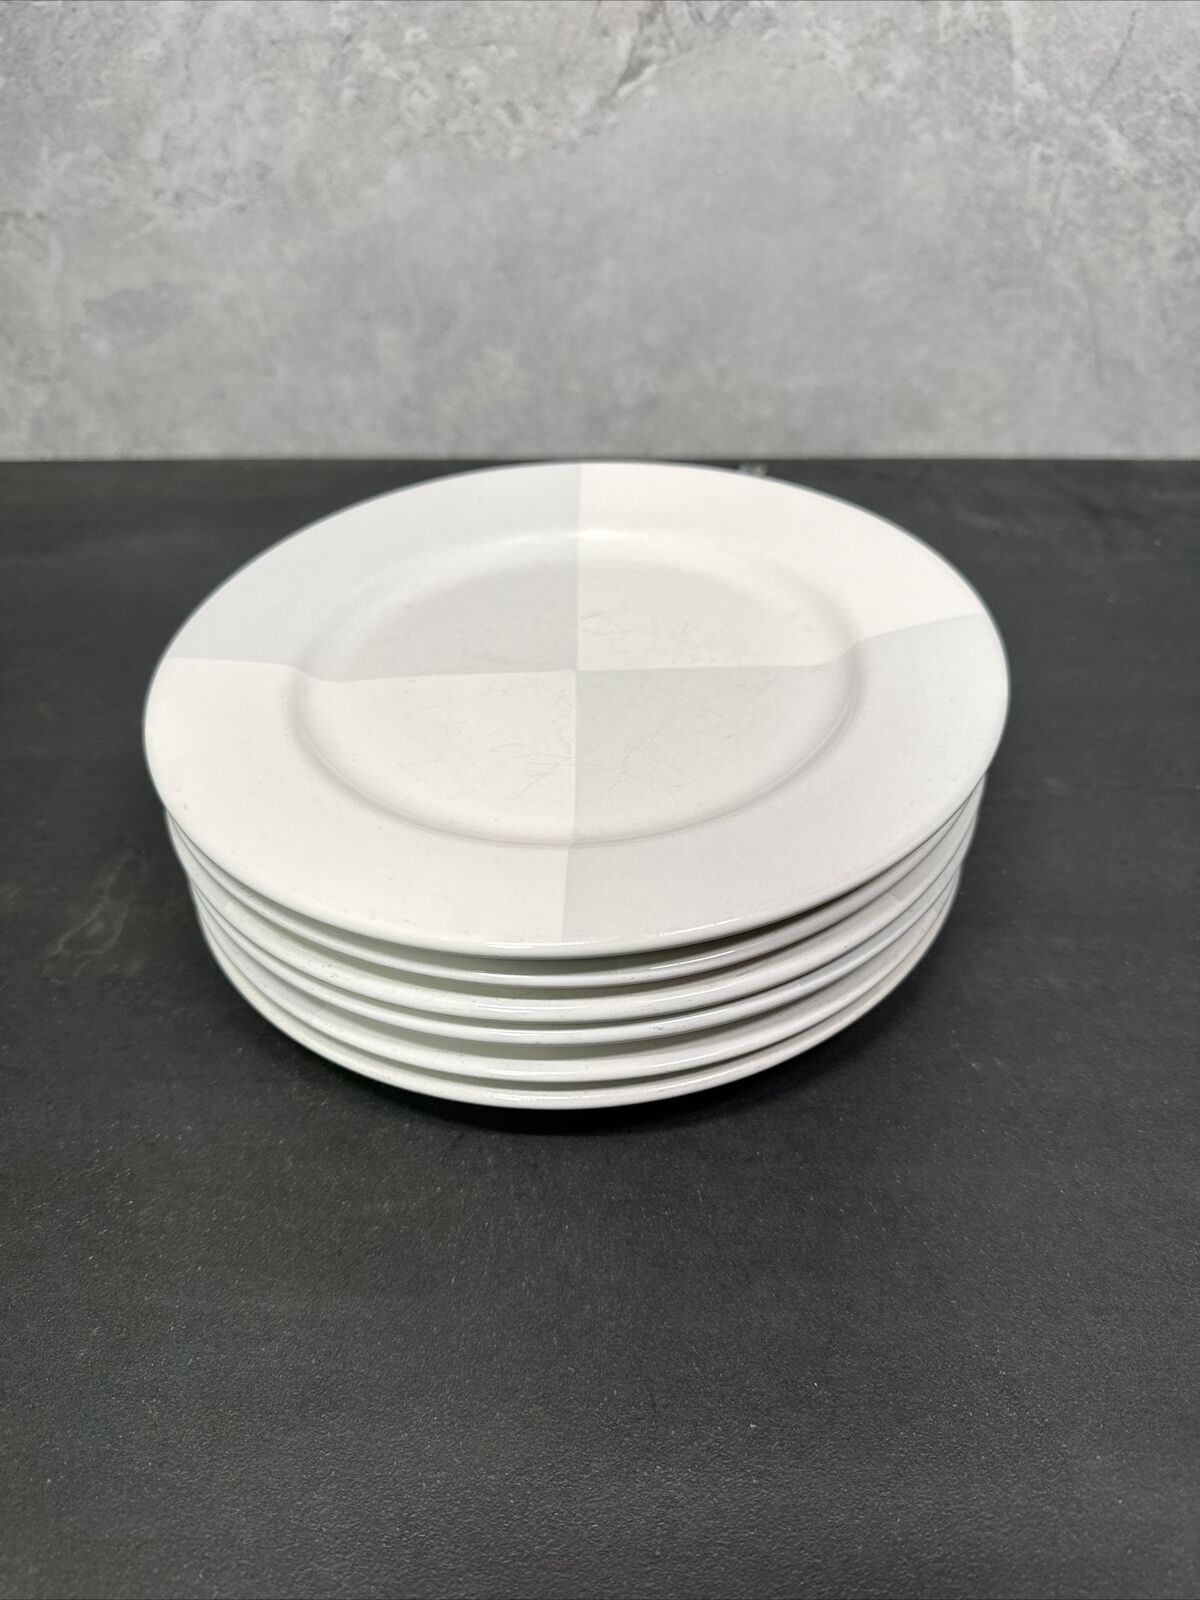 U1 Nautica Arctic White Salad Plate 3367897 Set Of 6 Plates White & Grey Pattern